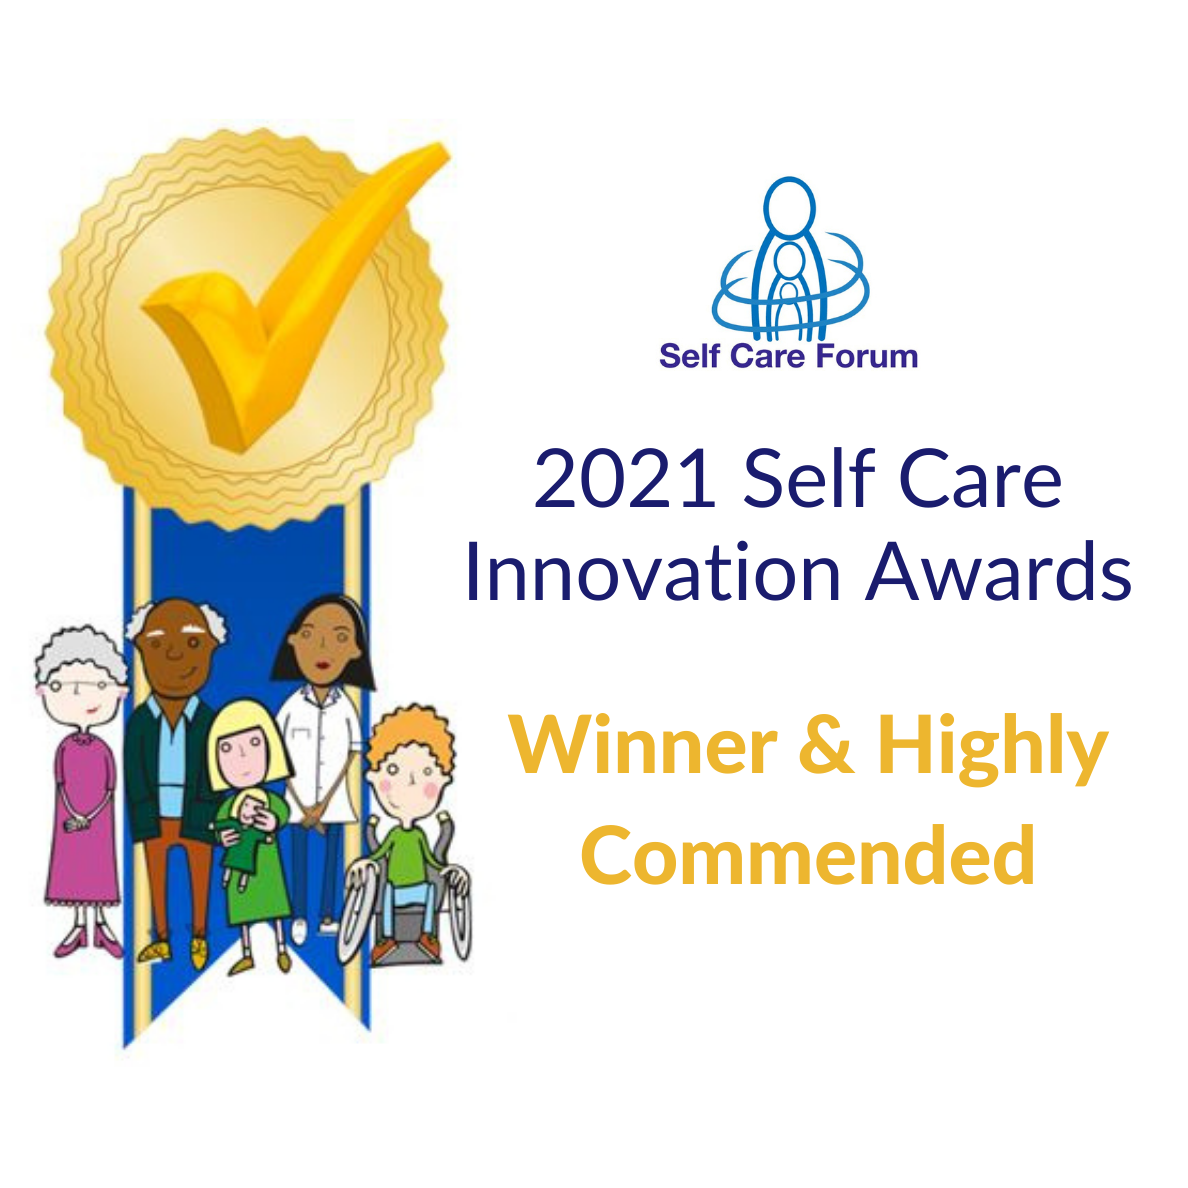 Pain management programme wins Self Care Innovation Award